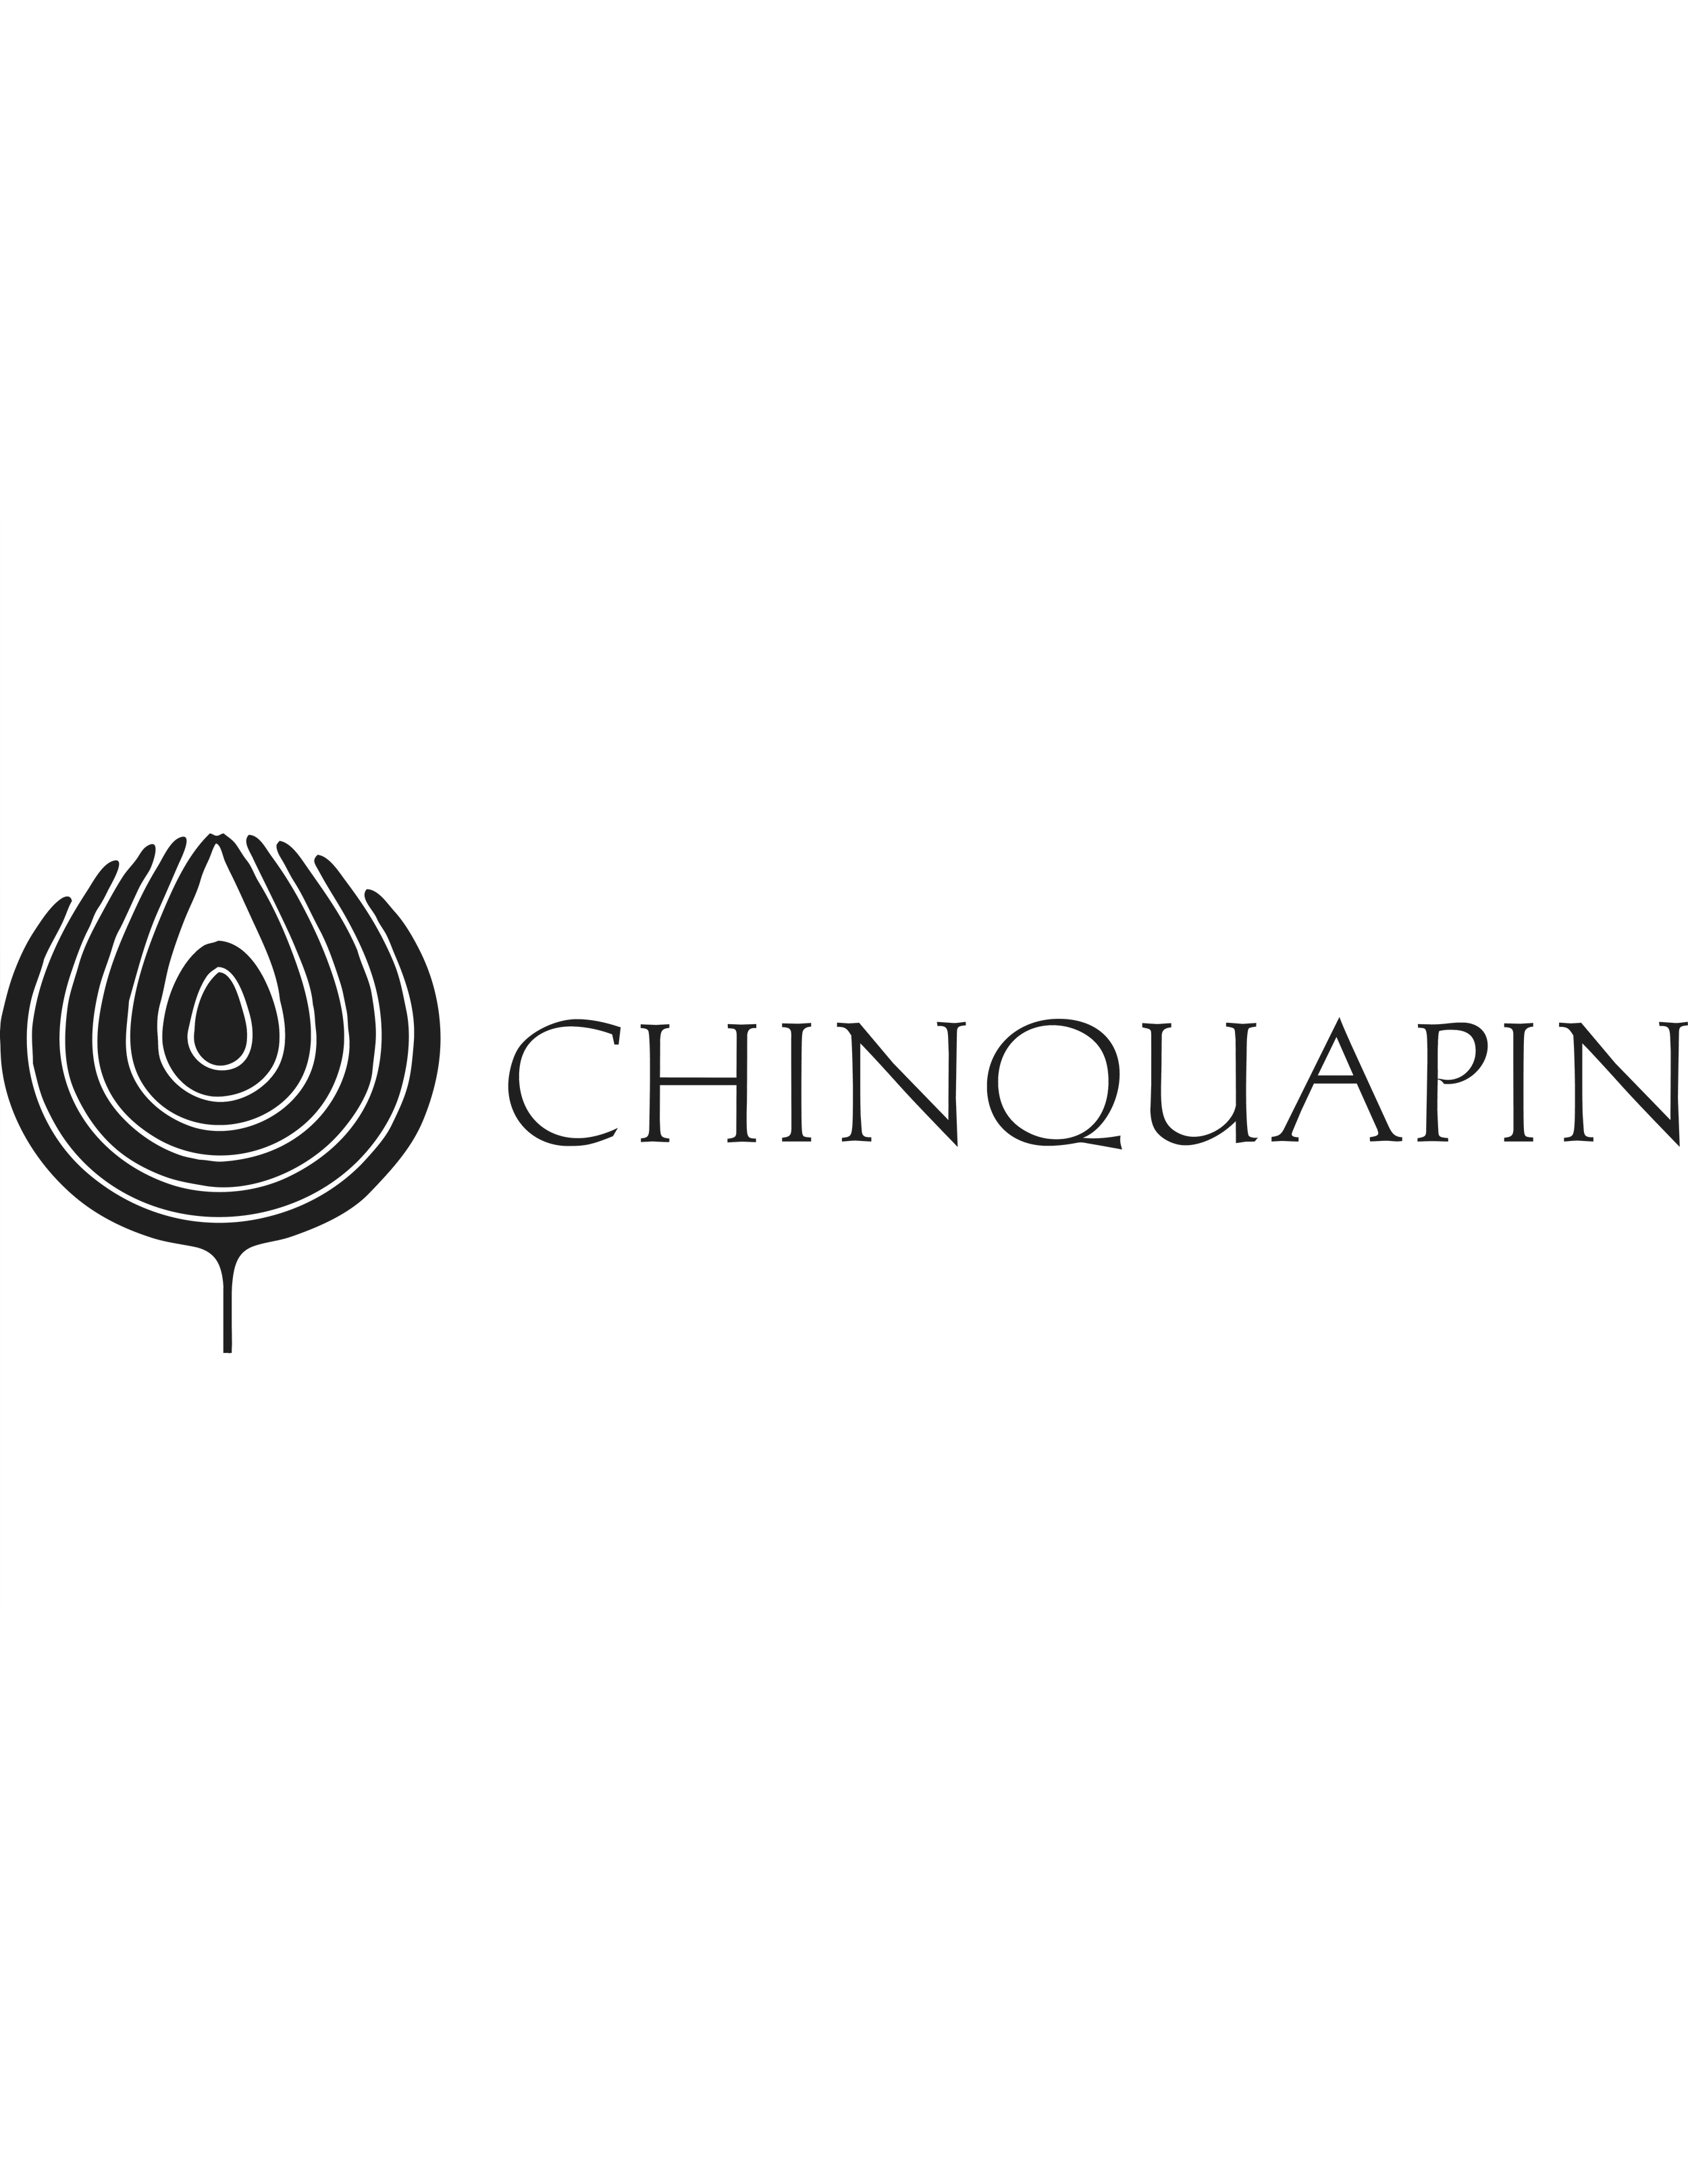 Chinquapin